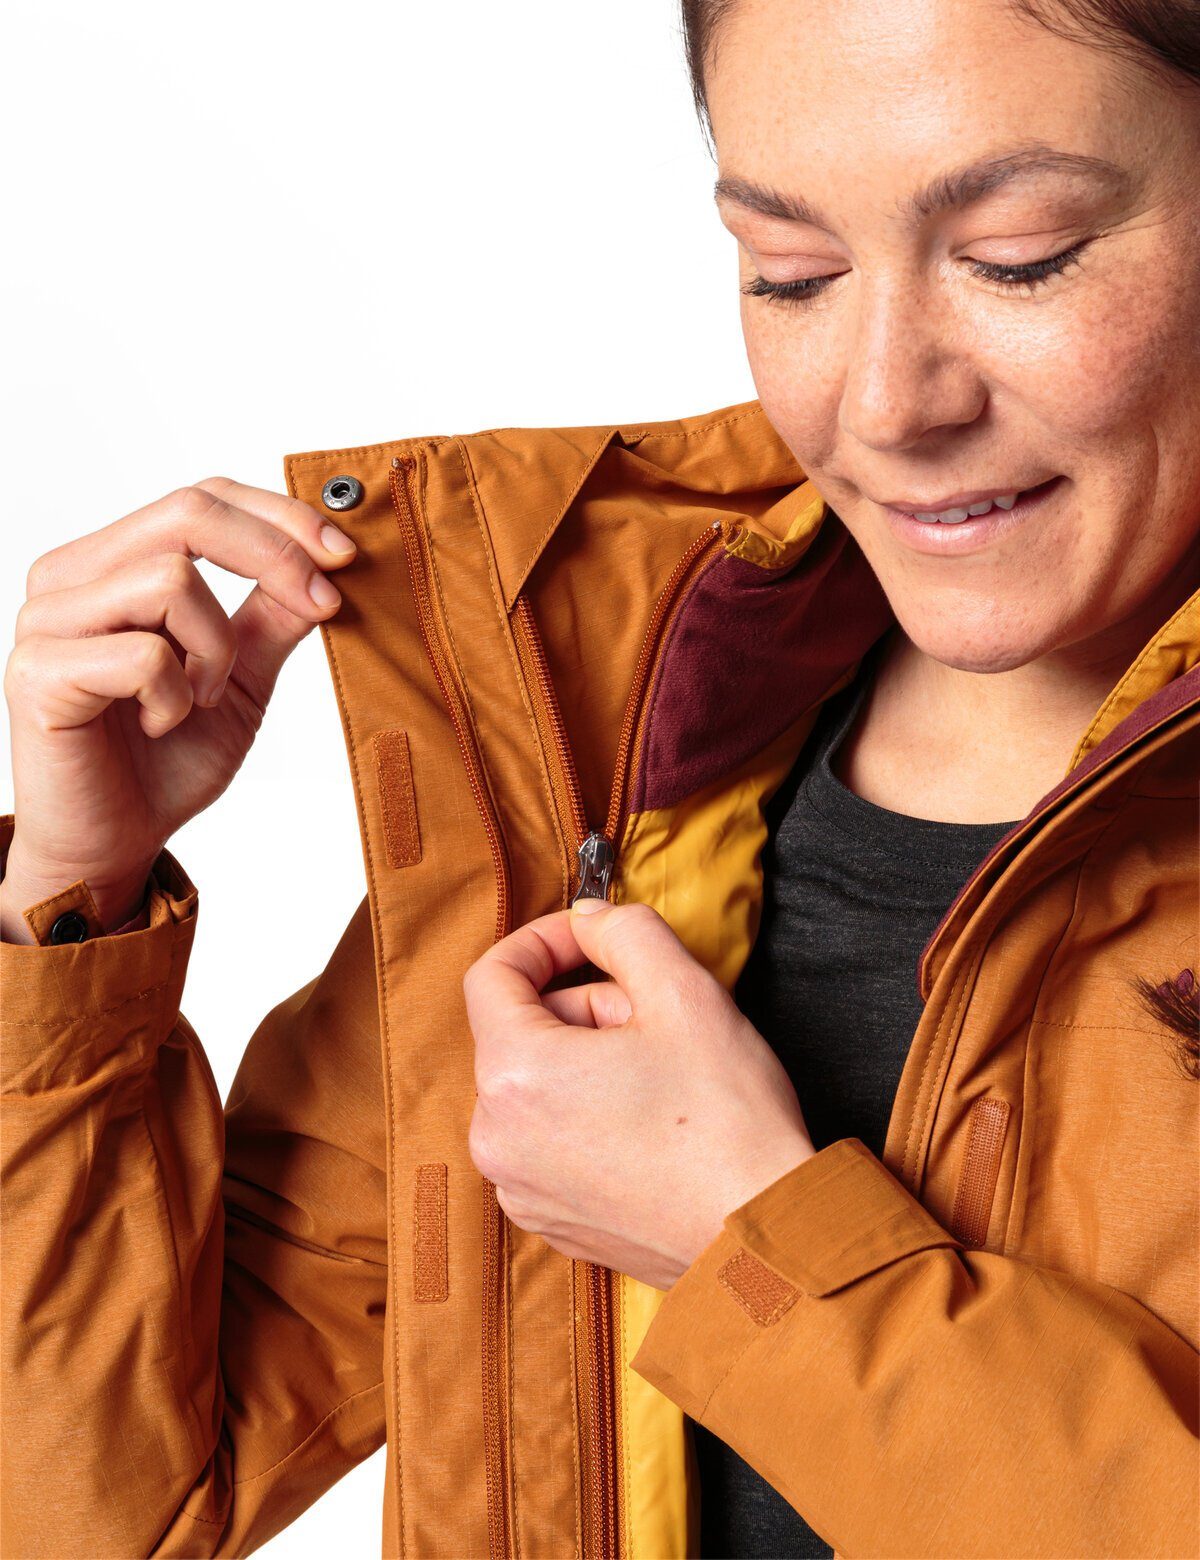 3in1 II VAUDE Jacket 3-in-1-Funktionsjacke Women's silt brown Skomer